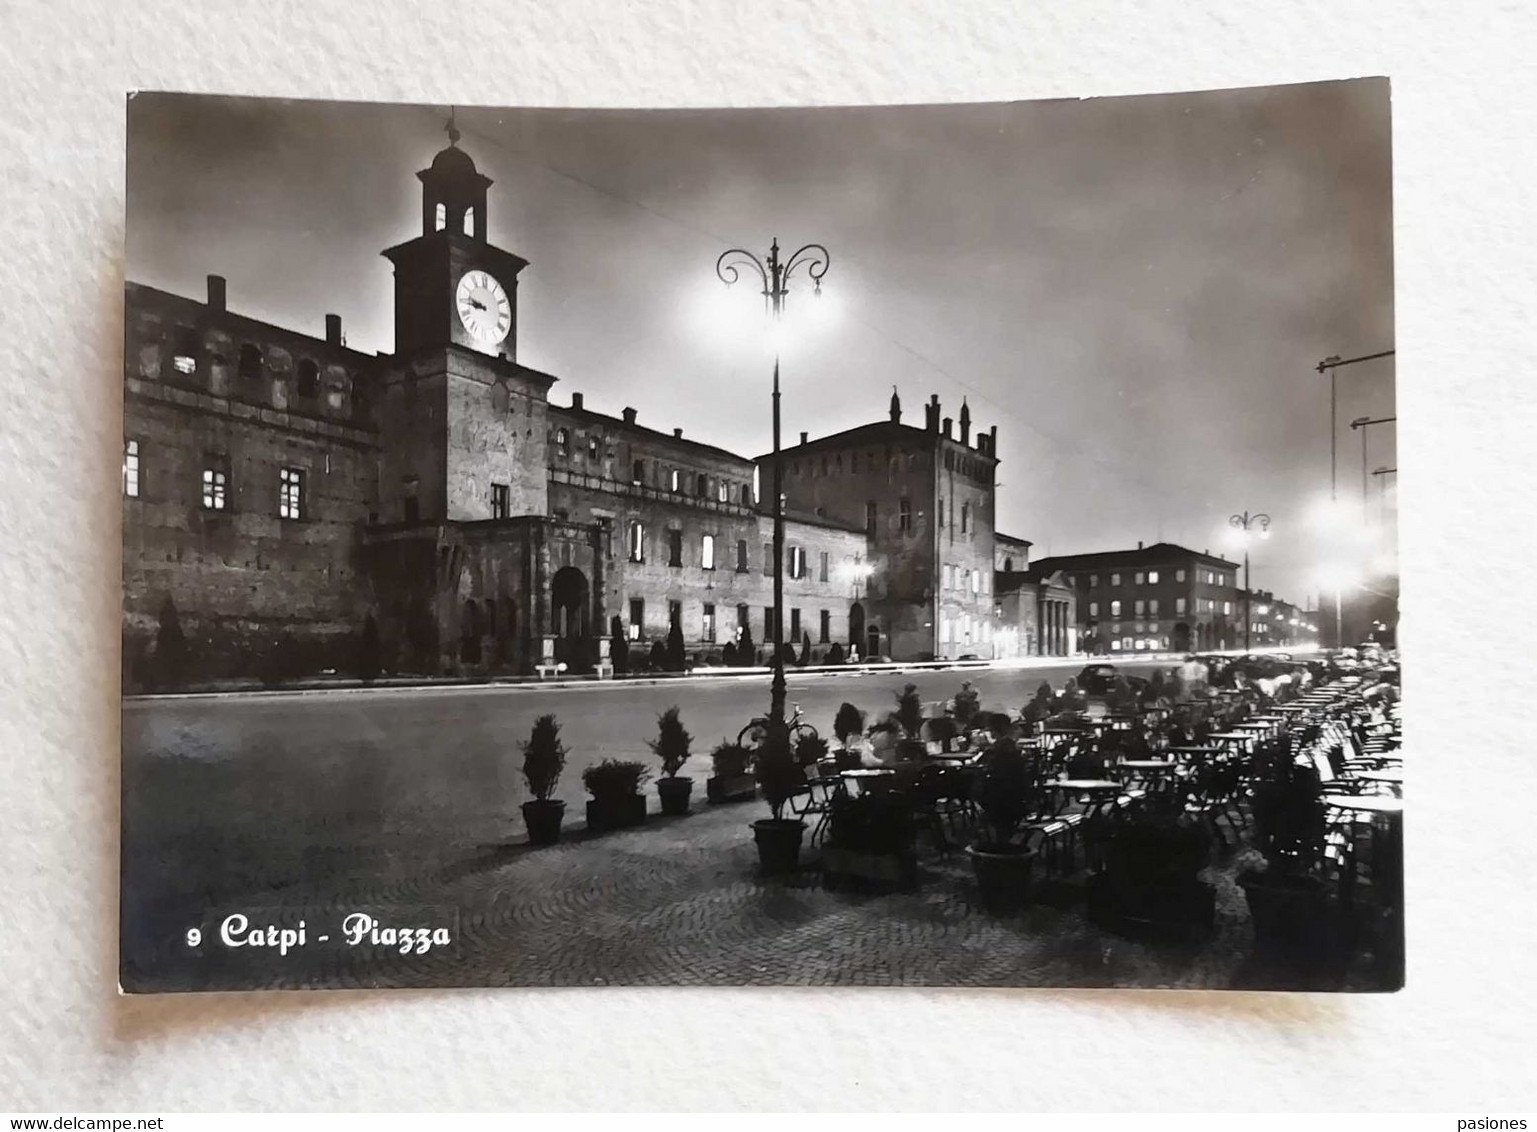 Cartolina Illustrata Carpi - Piazza (notturno), Viaggiata Per Bologna 1956 - Carpi